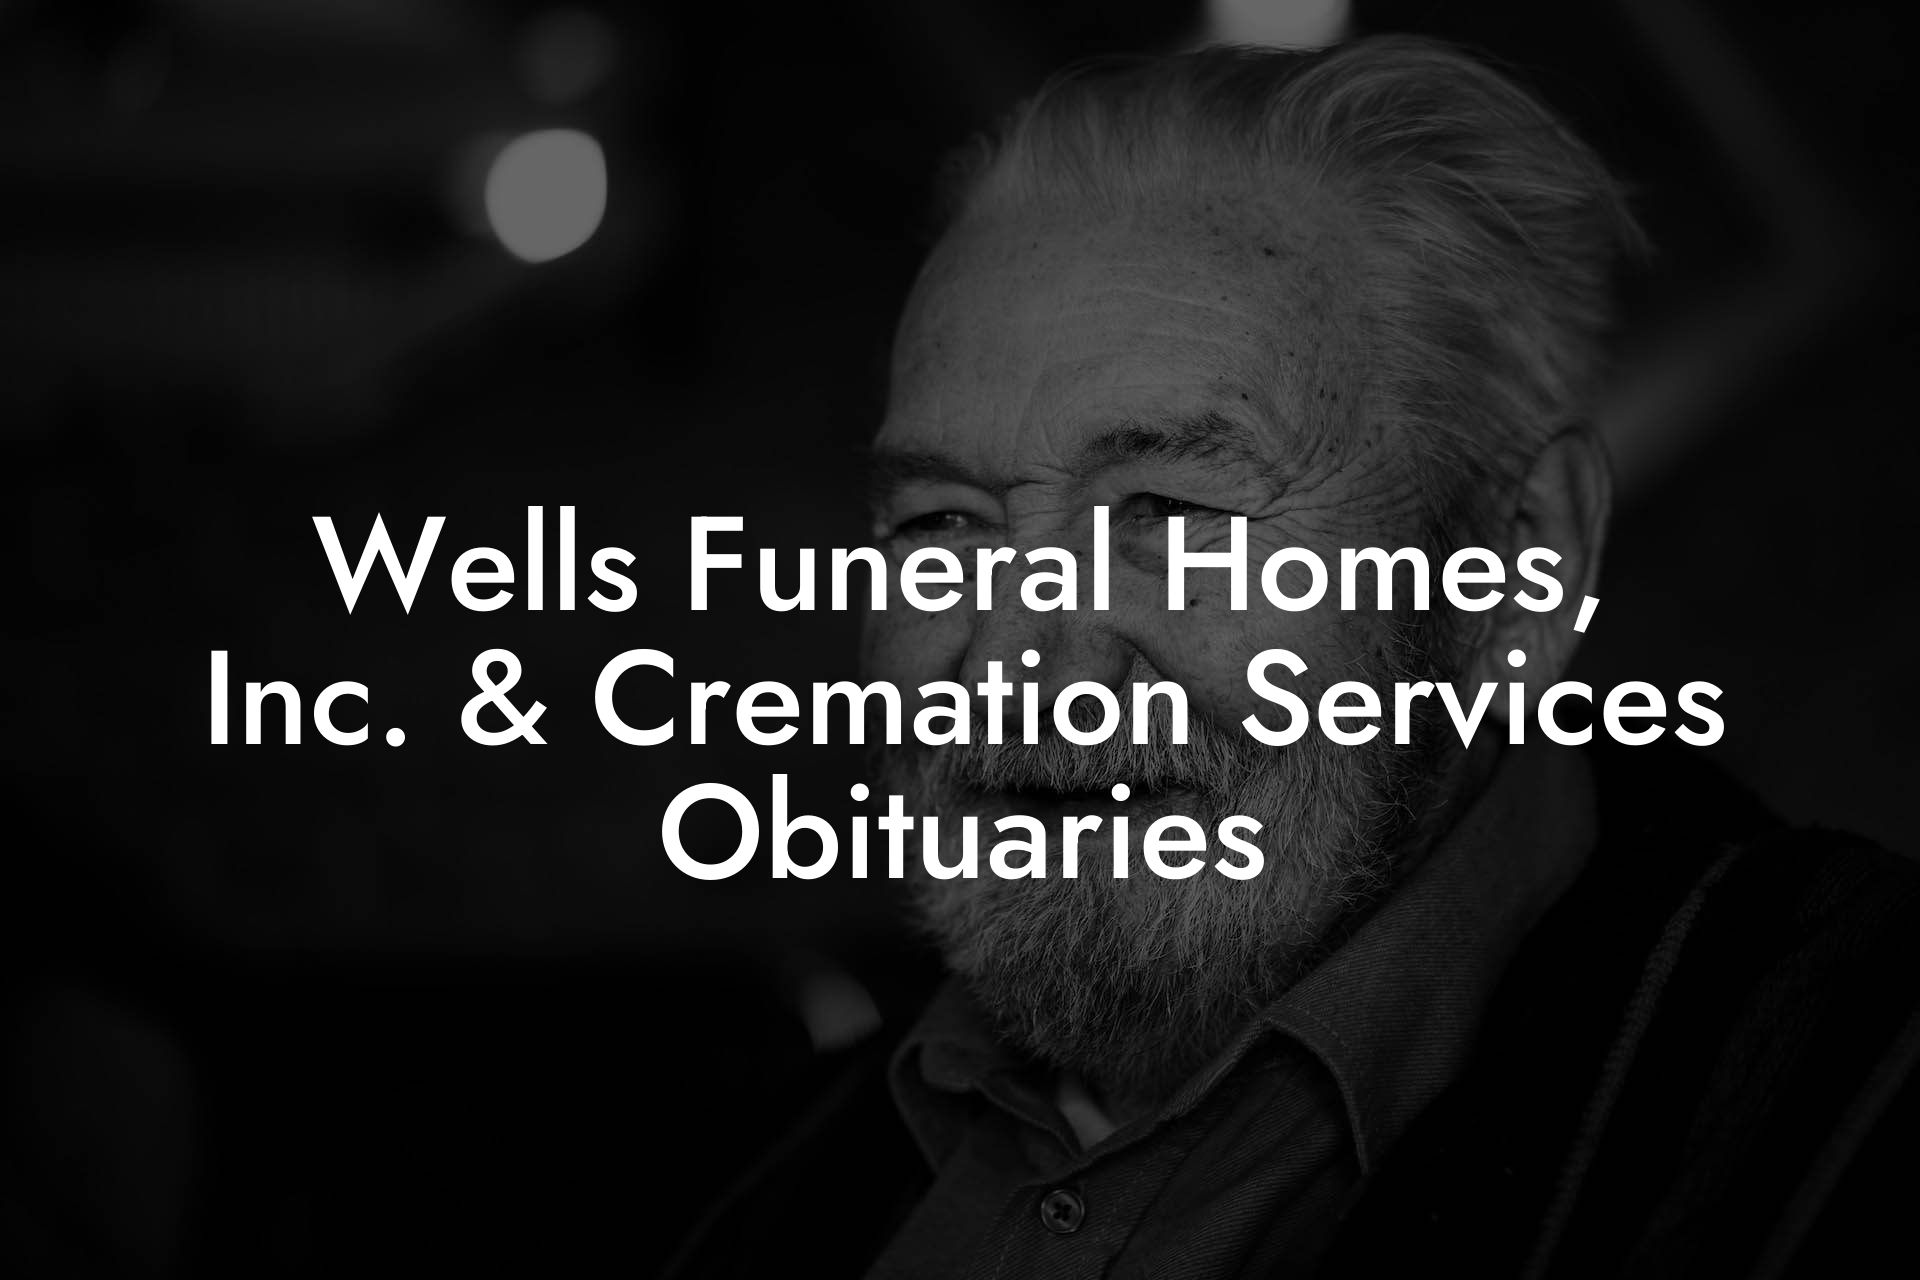 Wells Funeral Homes, Inc. & Cremation Services Obituaries